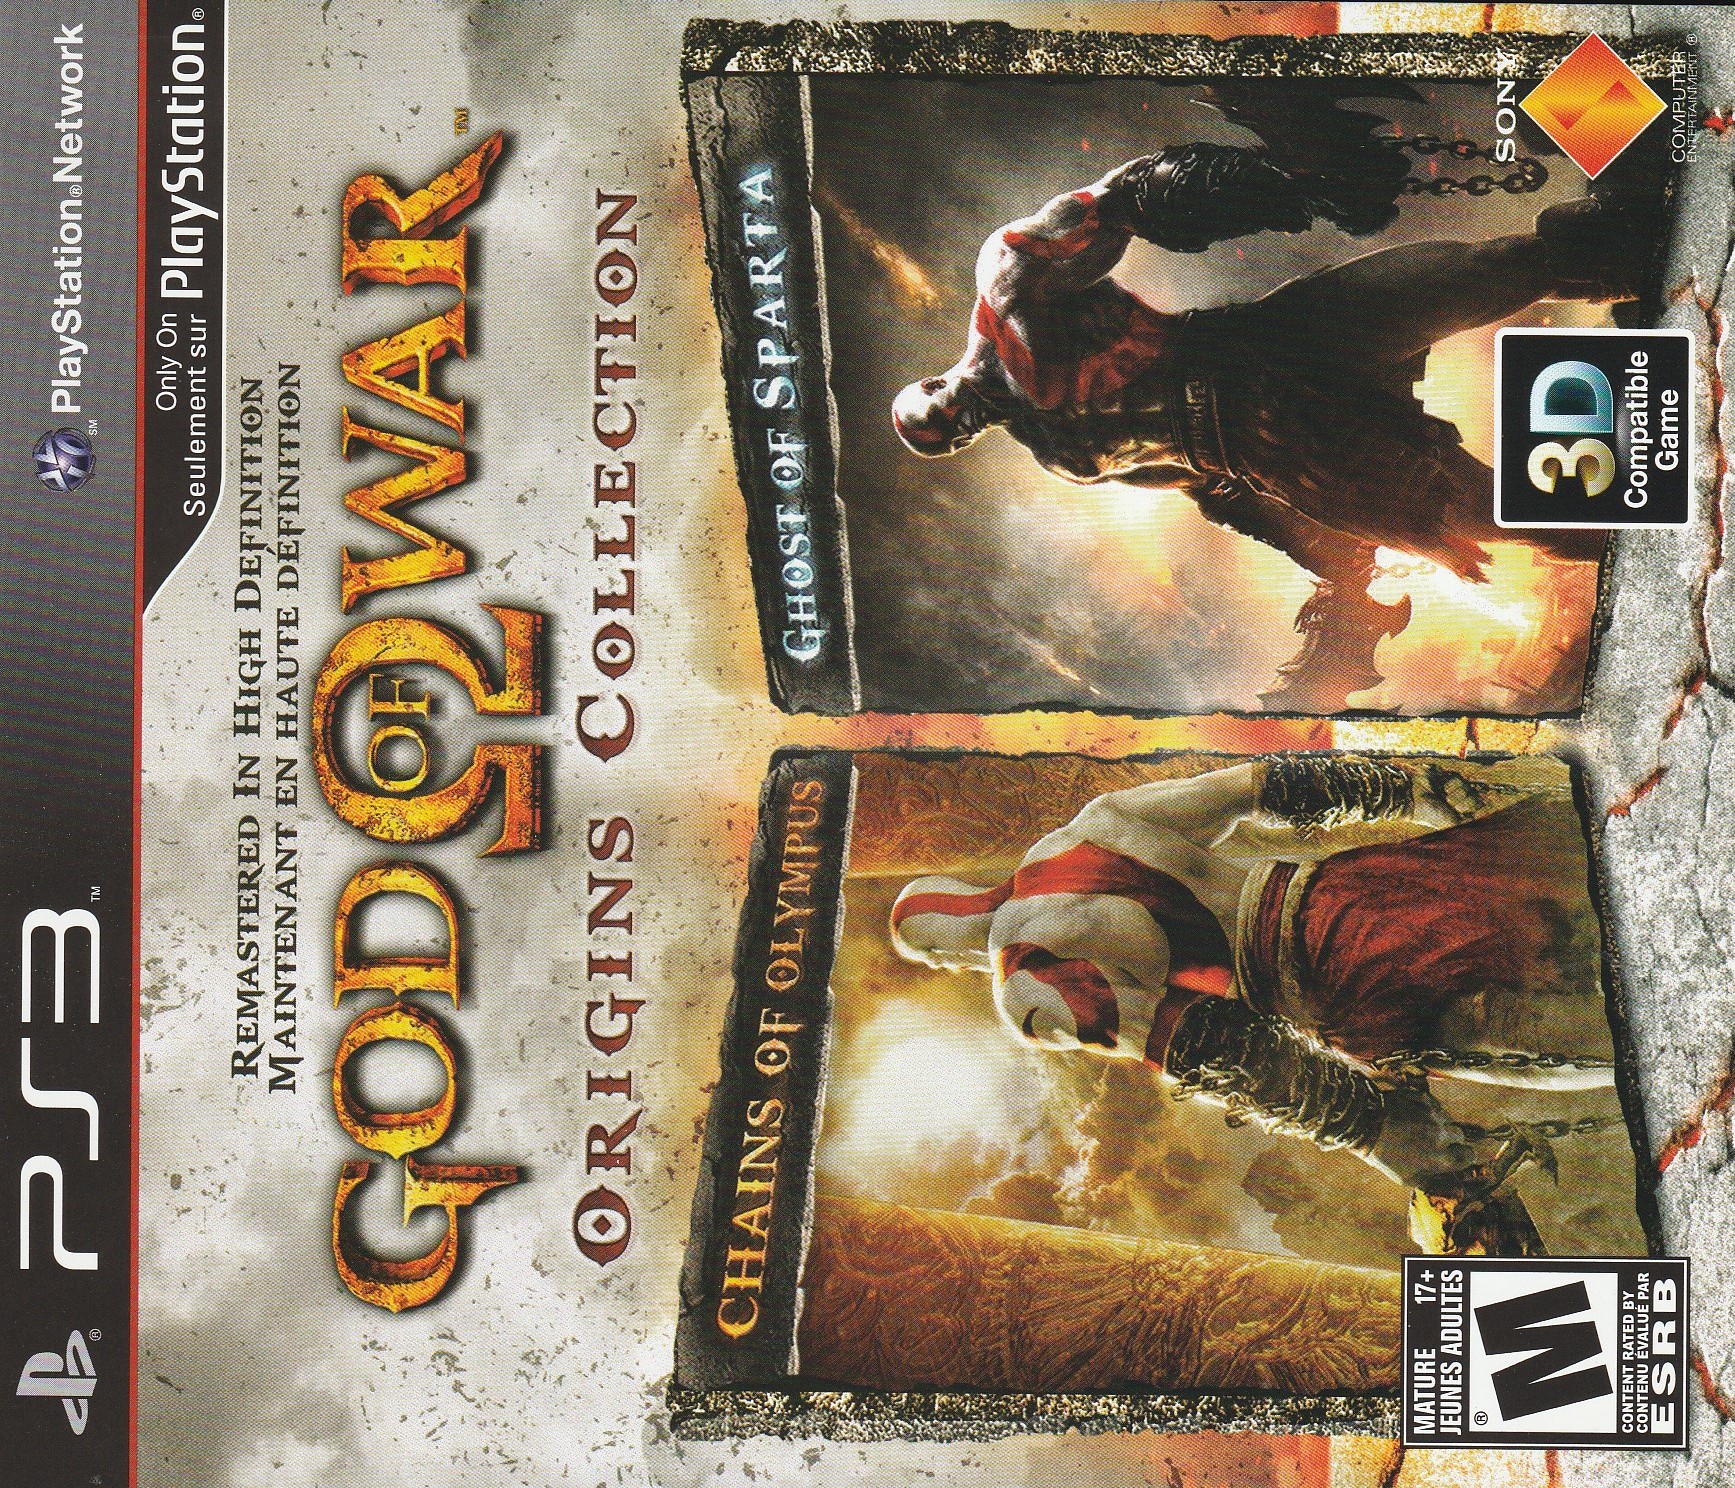 'God of War - origins collection'